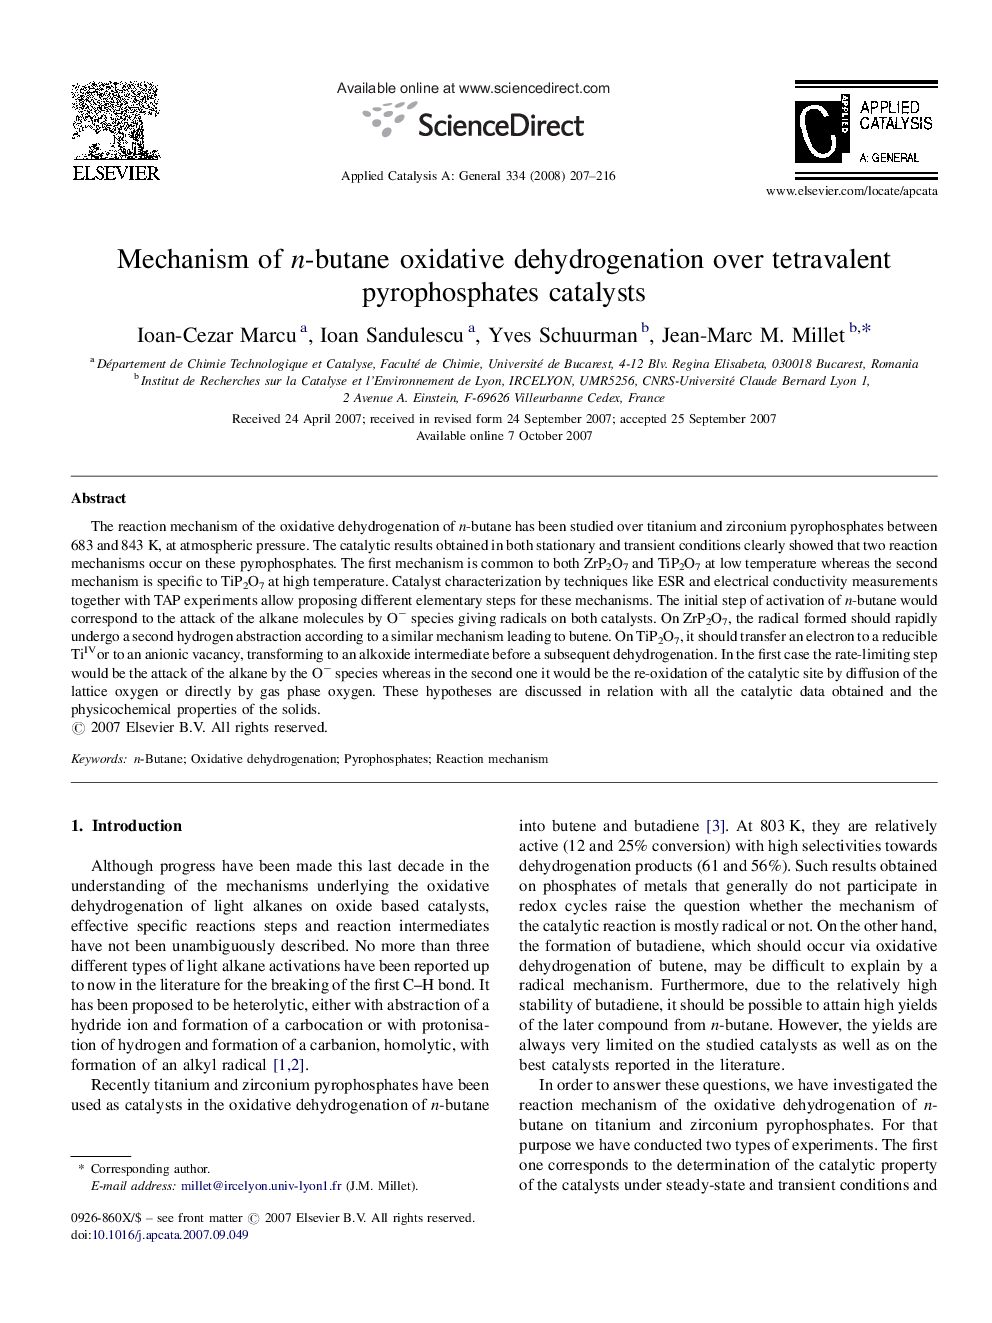 Mechanism of n-butane oxidative dehydrogenation over tetravalent pyrophosphates catalysts